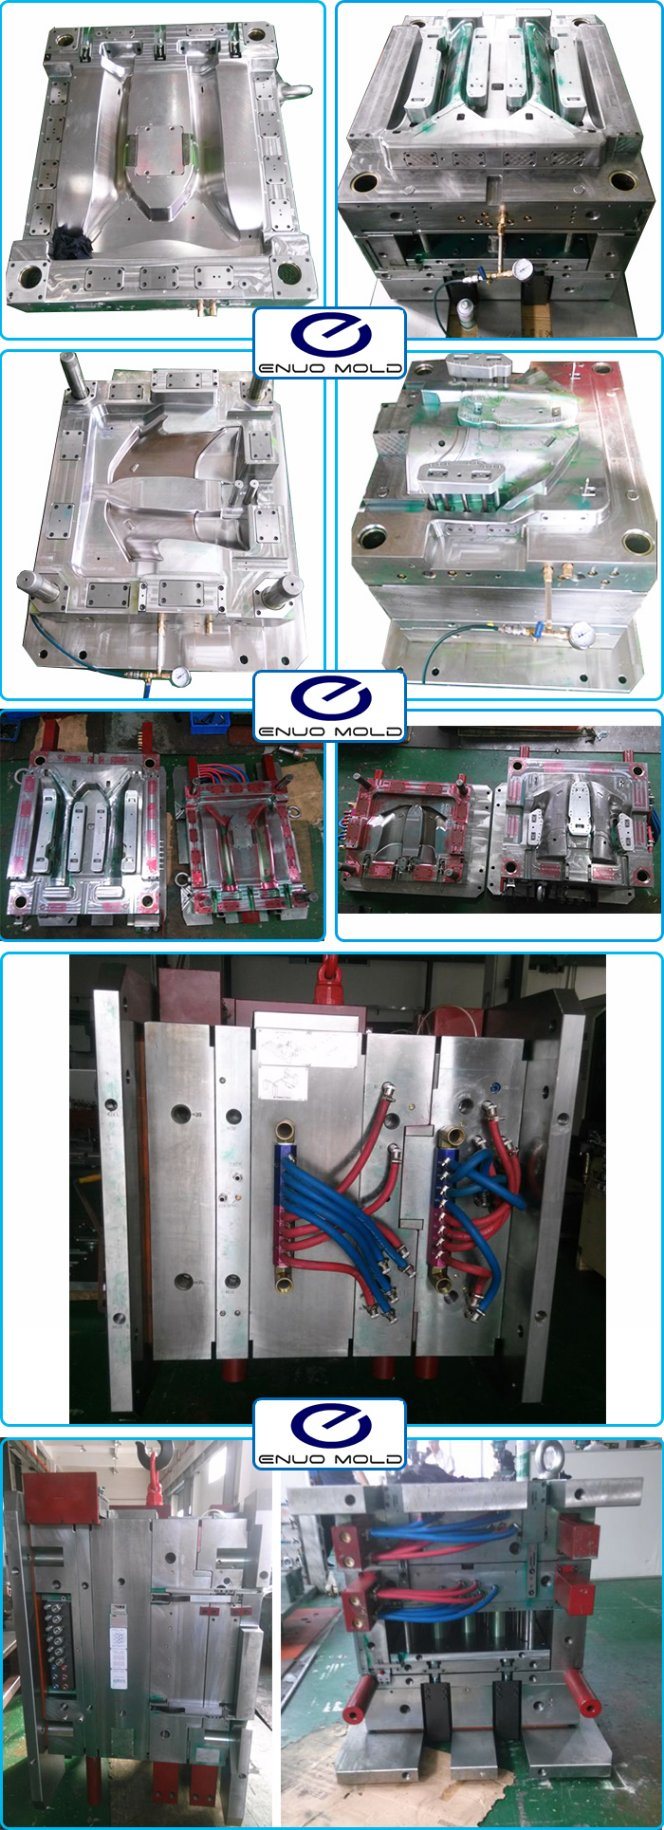 China Dongguan Mold/Tooling Supplier Good at Automobile Parts Production